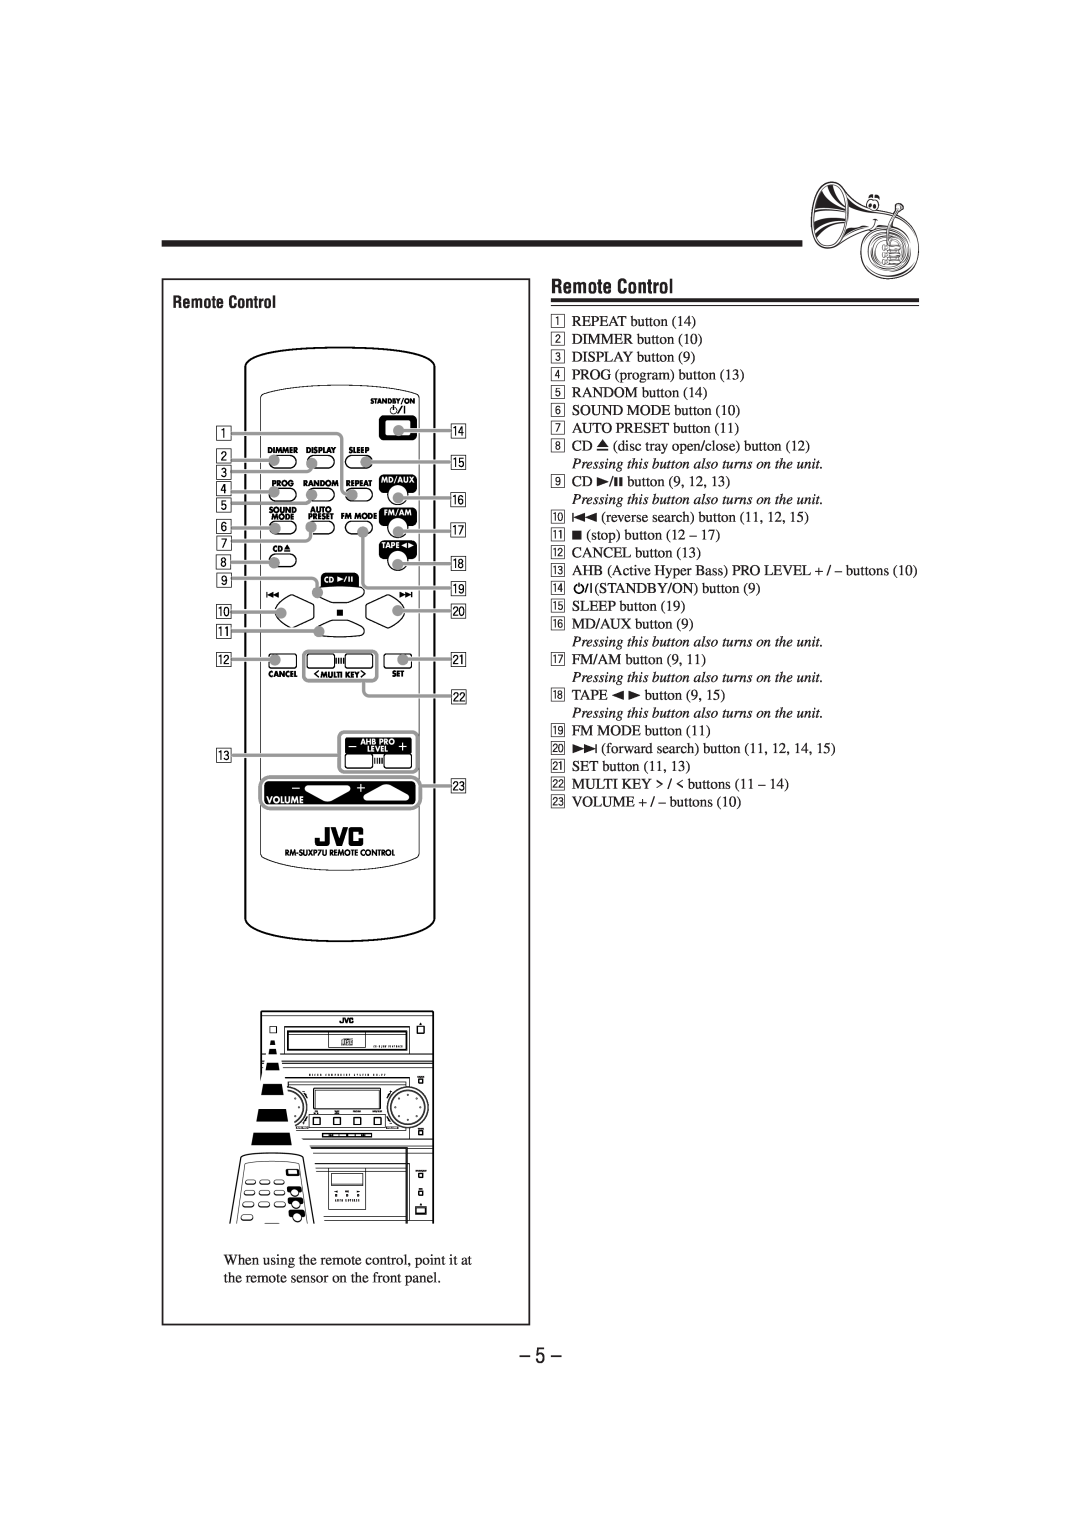 JVC UX-P7 manual Remote Control 